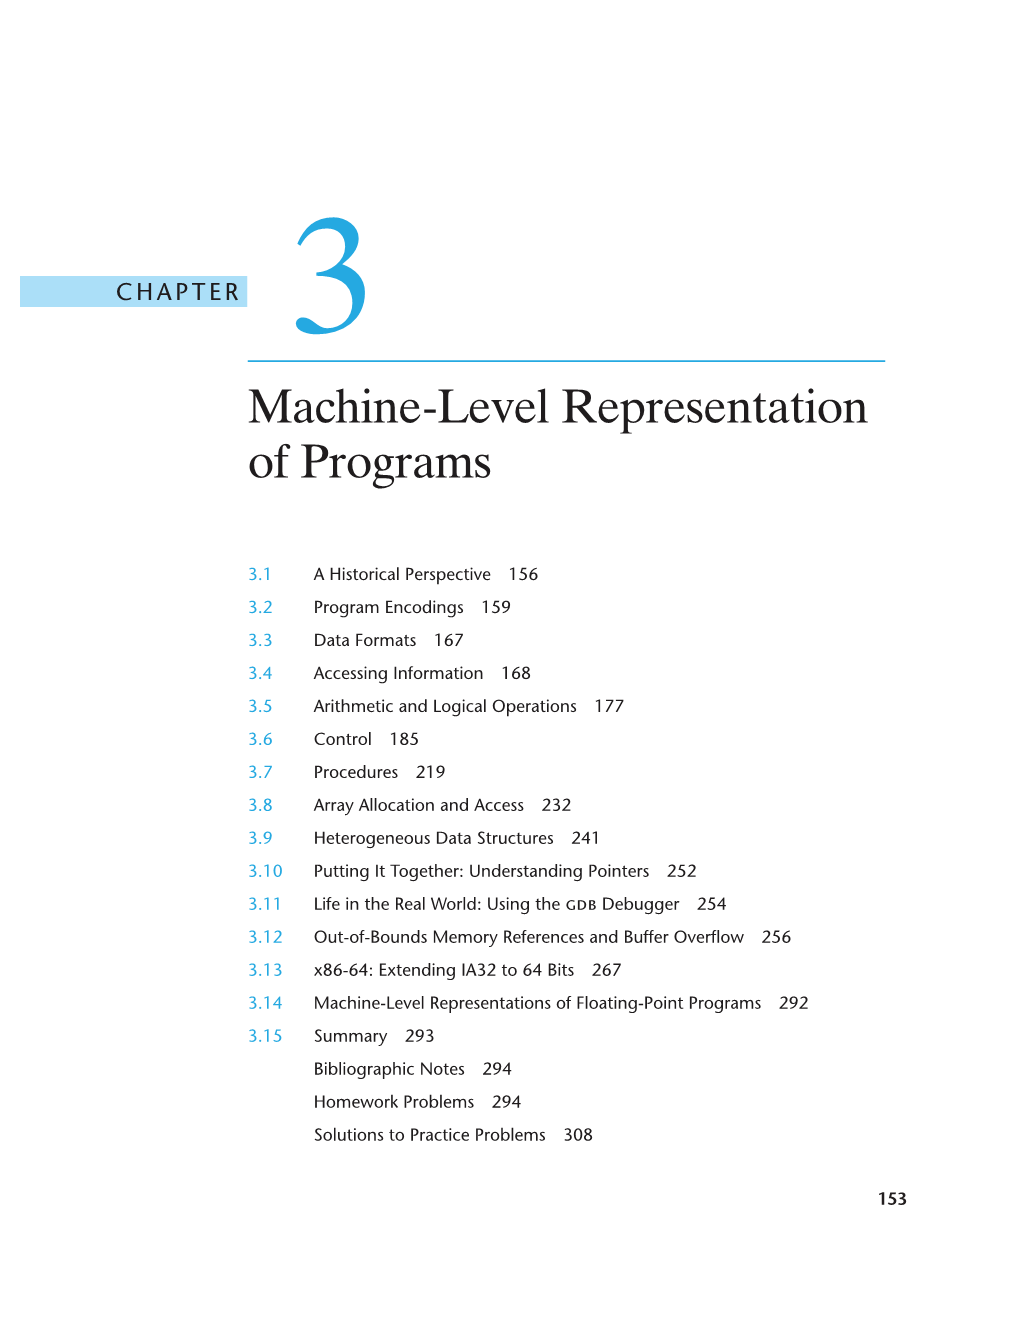 Machine-Level Representation of Programs